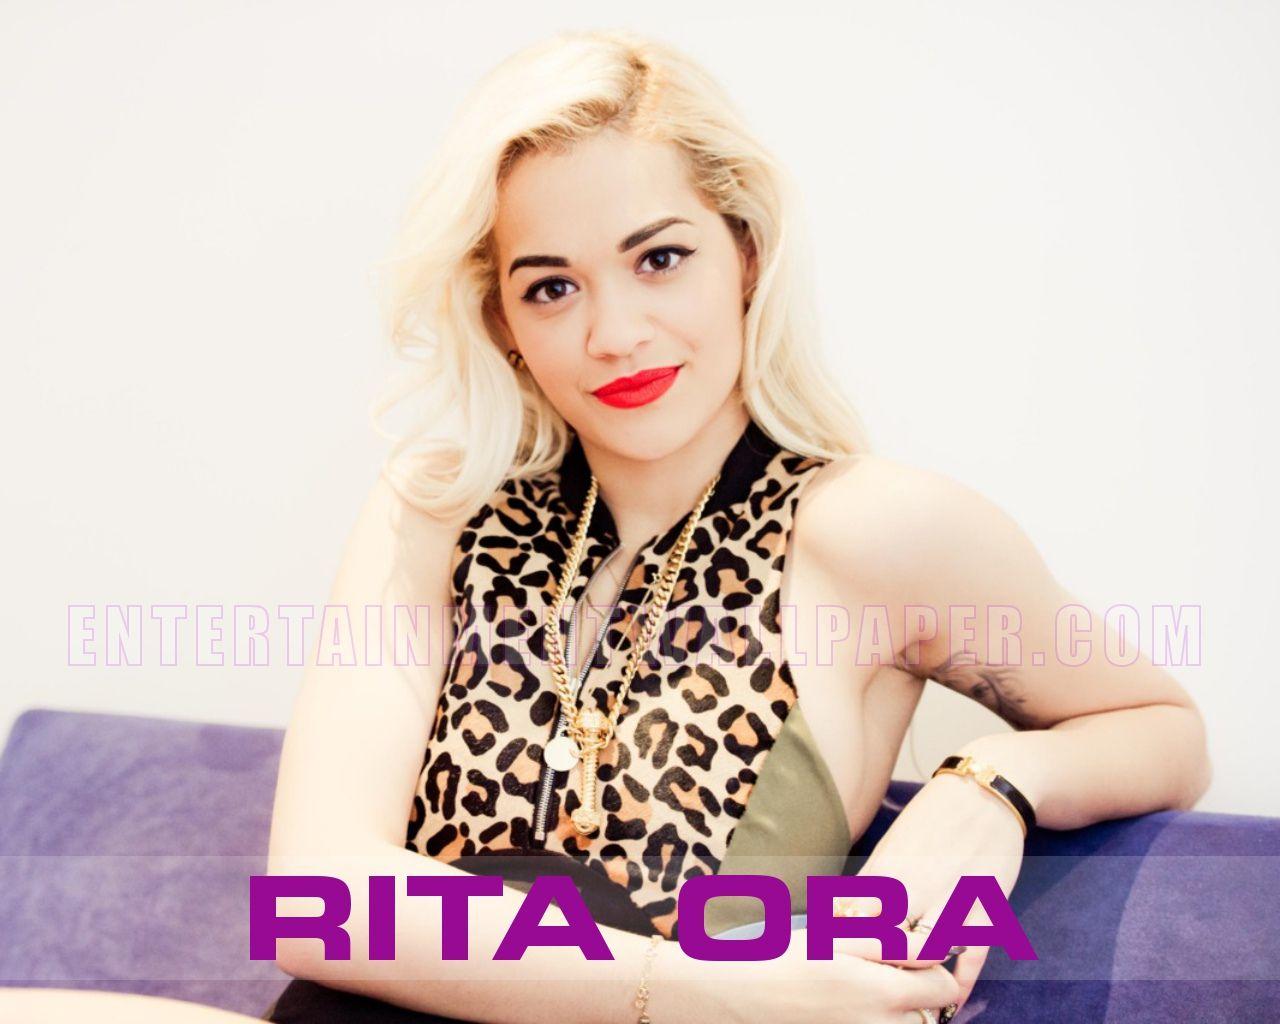 Rita ORA Wallpaper. Rita Ora image Photo Screen